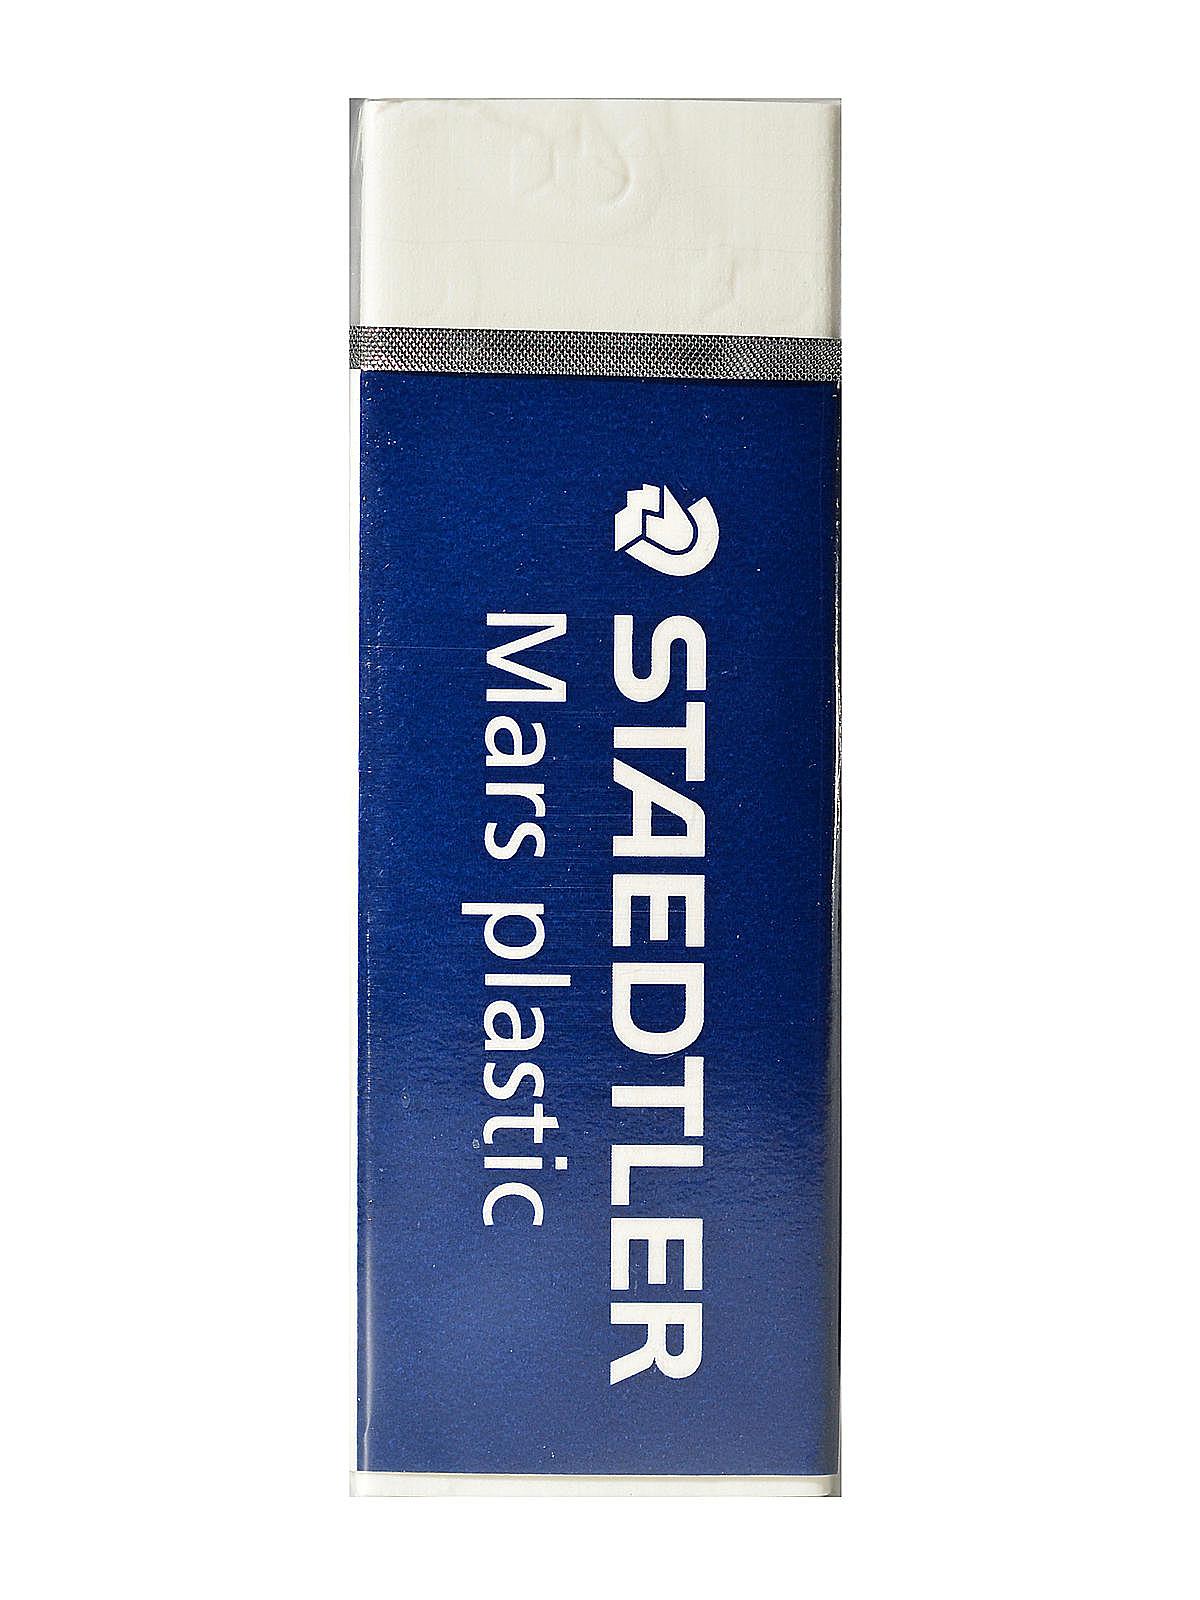 Staedtler White Plastic Eraser | MisterArt.com